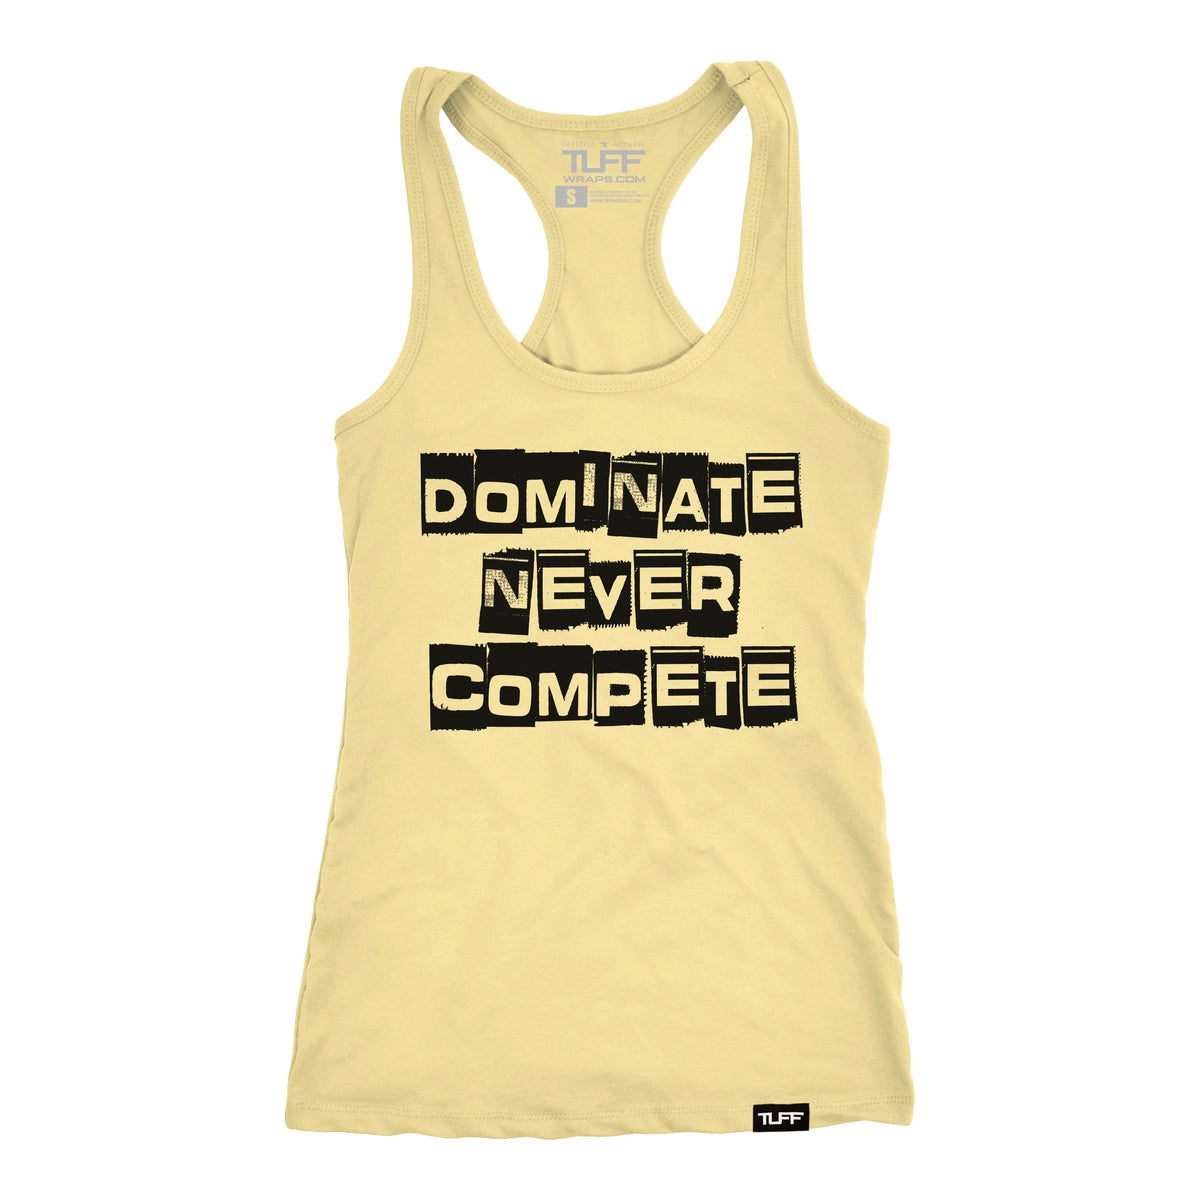 Dominate Never Compete Racerback Tank XS / Banana Cream TuffWraps.com